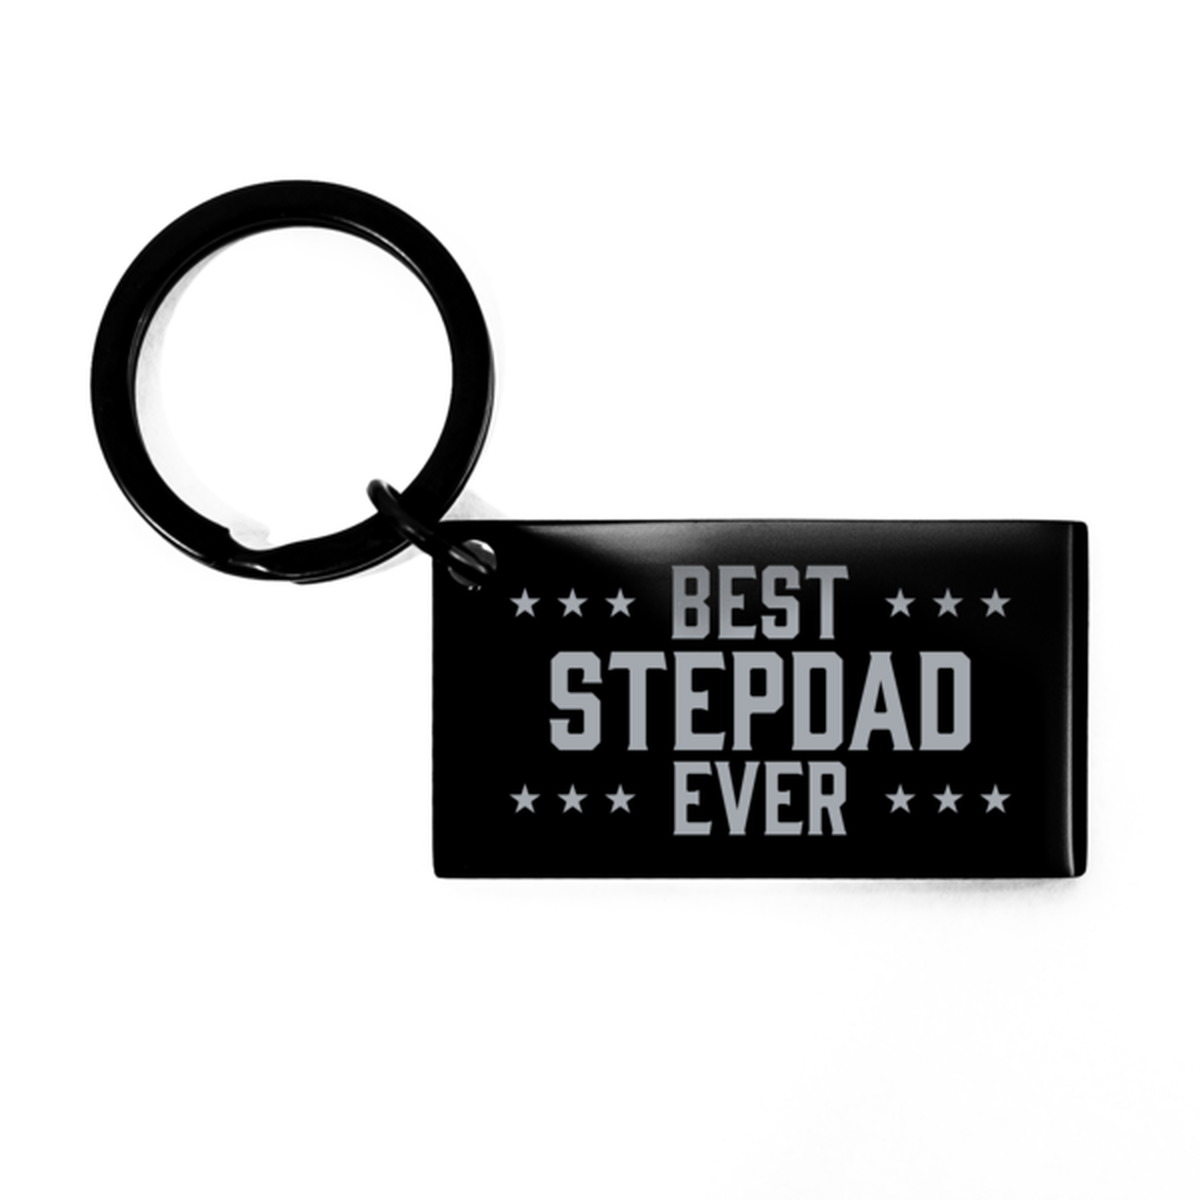 Best Stepdad Ever Stepdad Gifts, Funny Black Keychain For Stepdad, Birthday Engraved Keyring Presents For Men